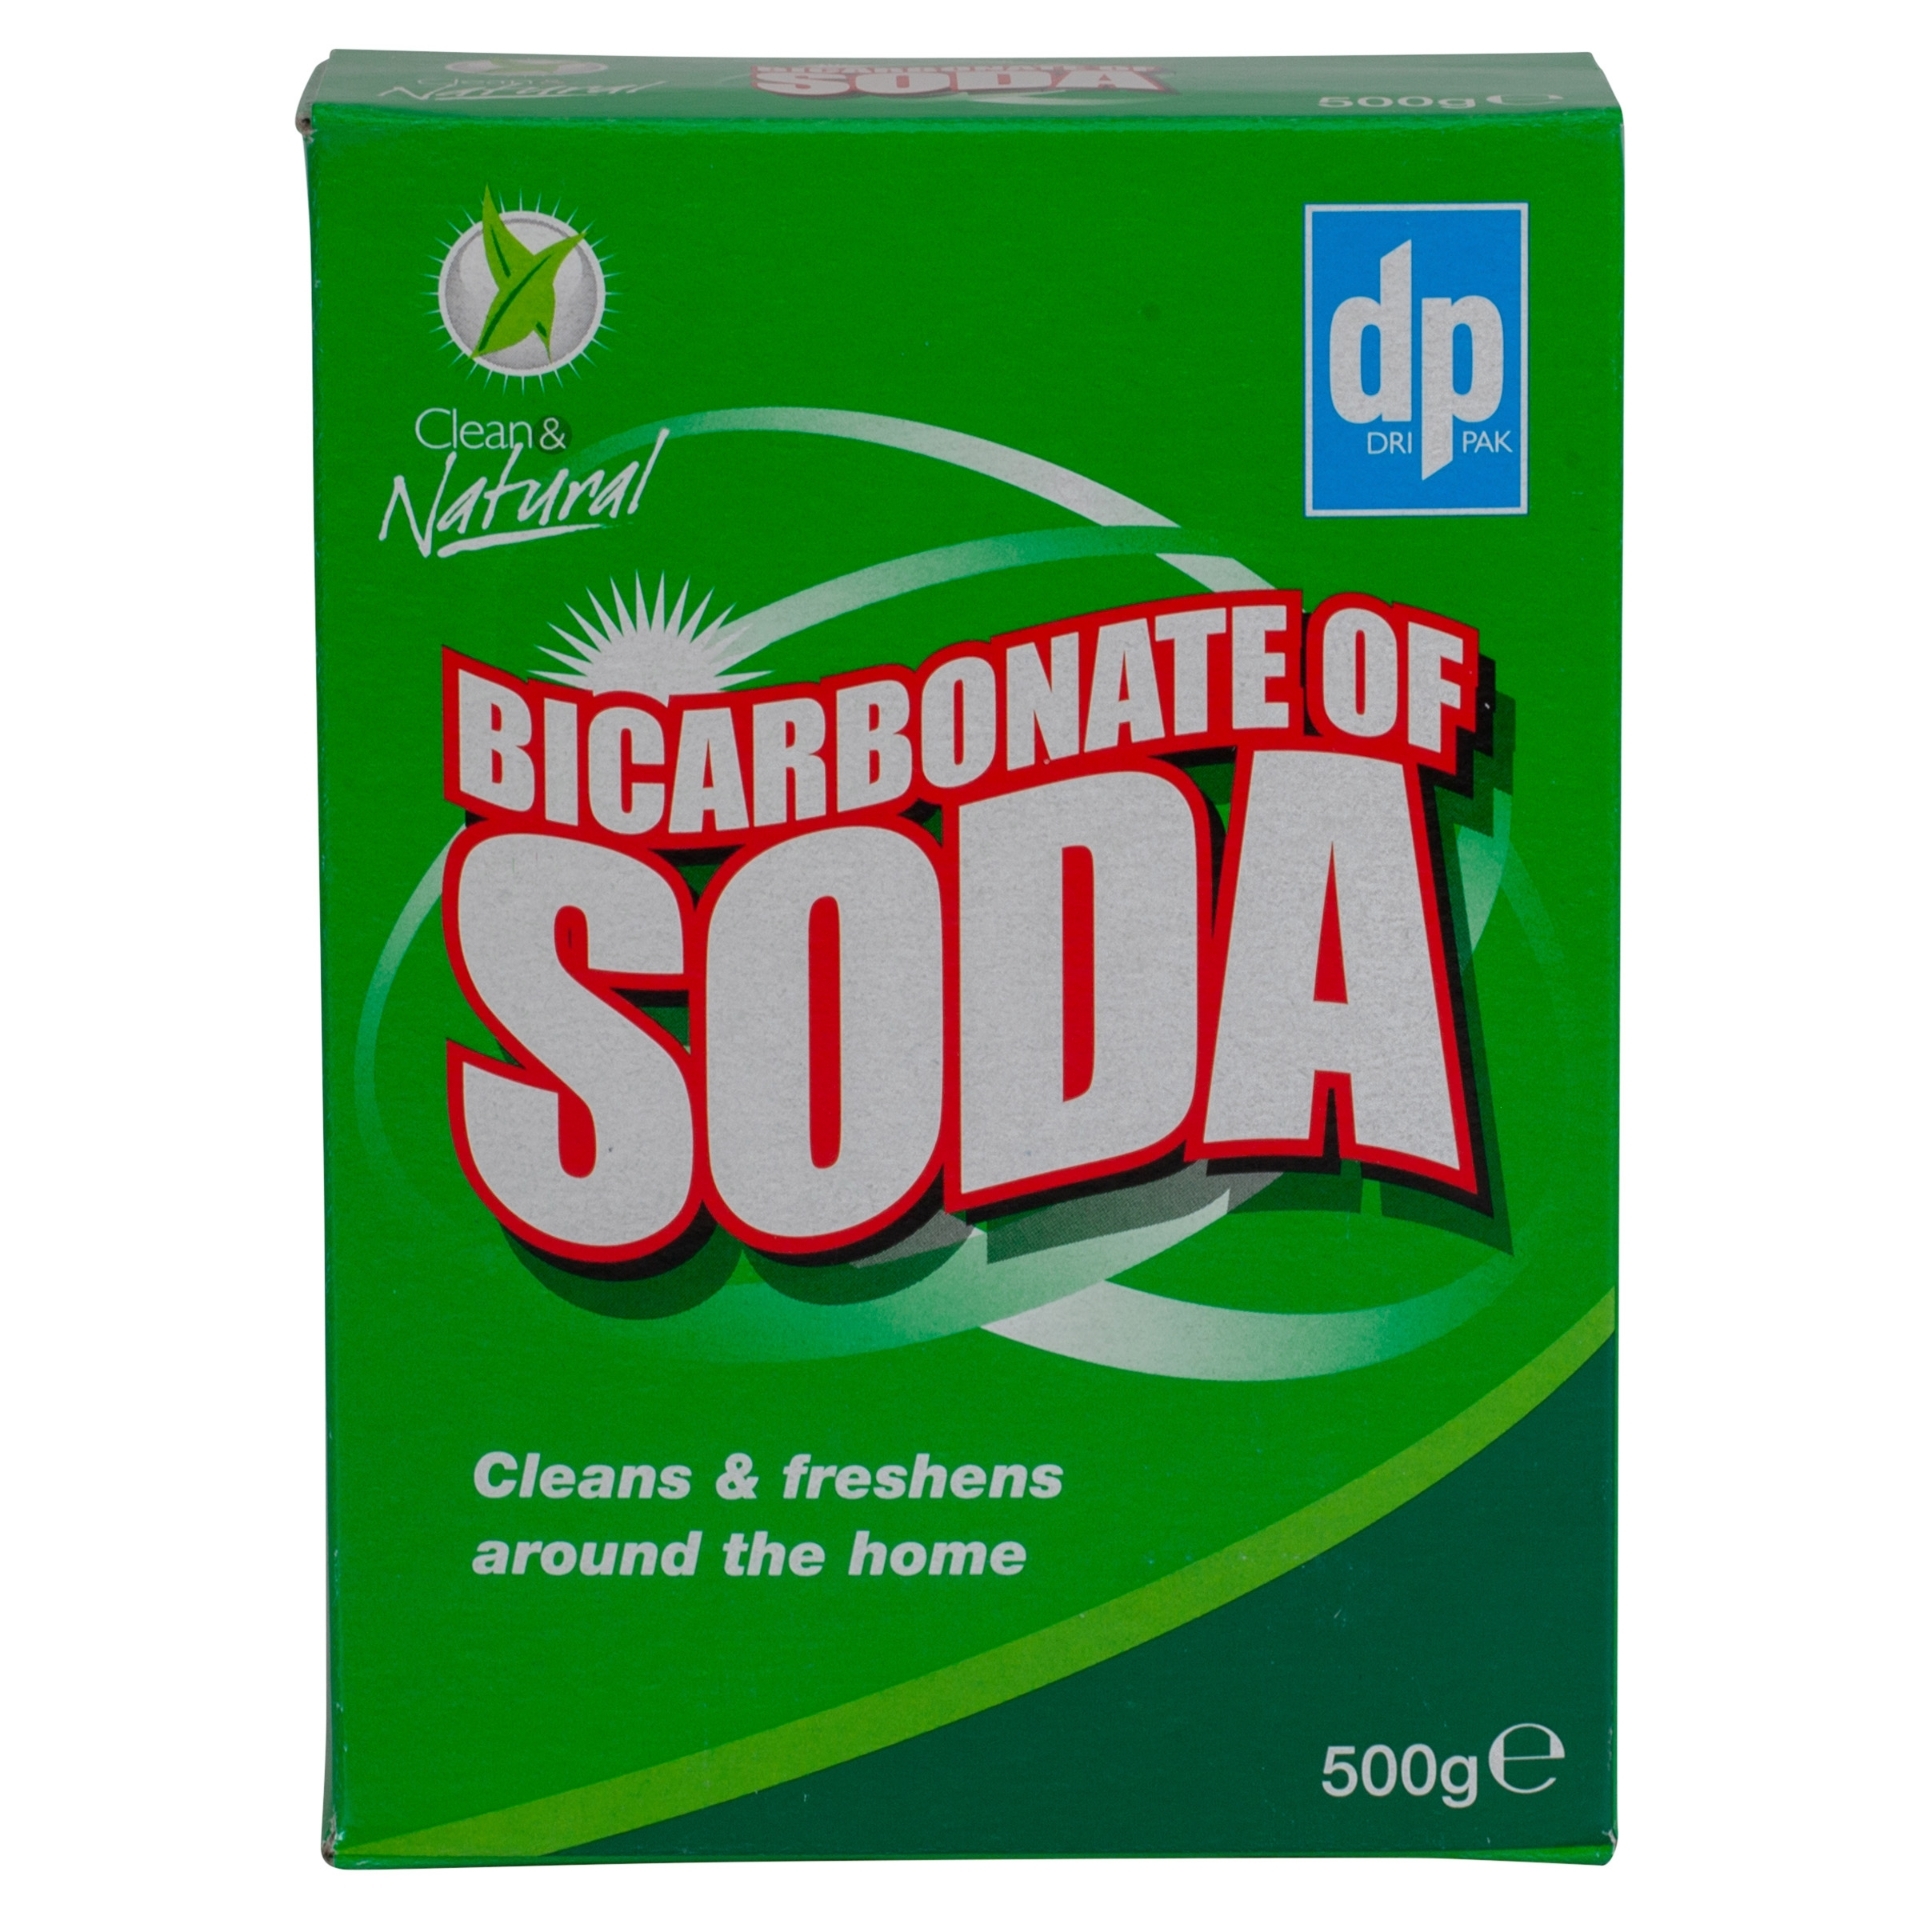 Picture of DRI-PAK BICARBONATE OF SODA BOX